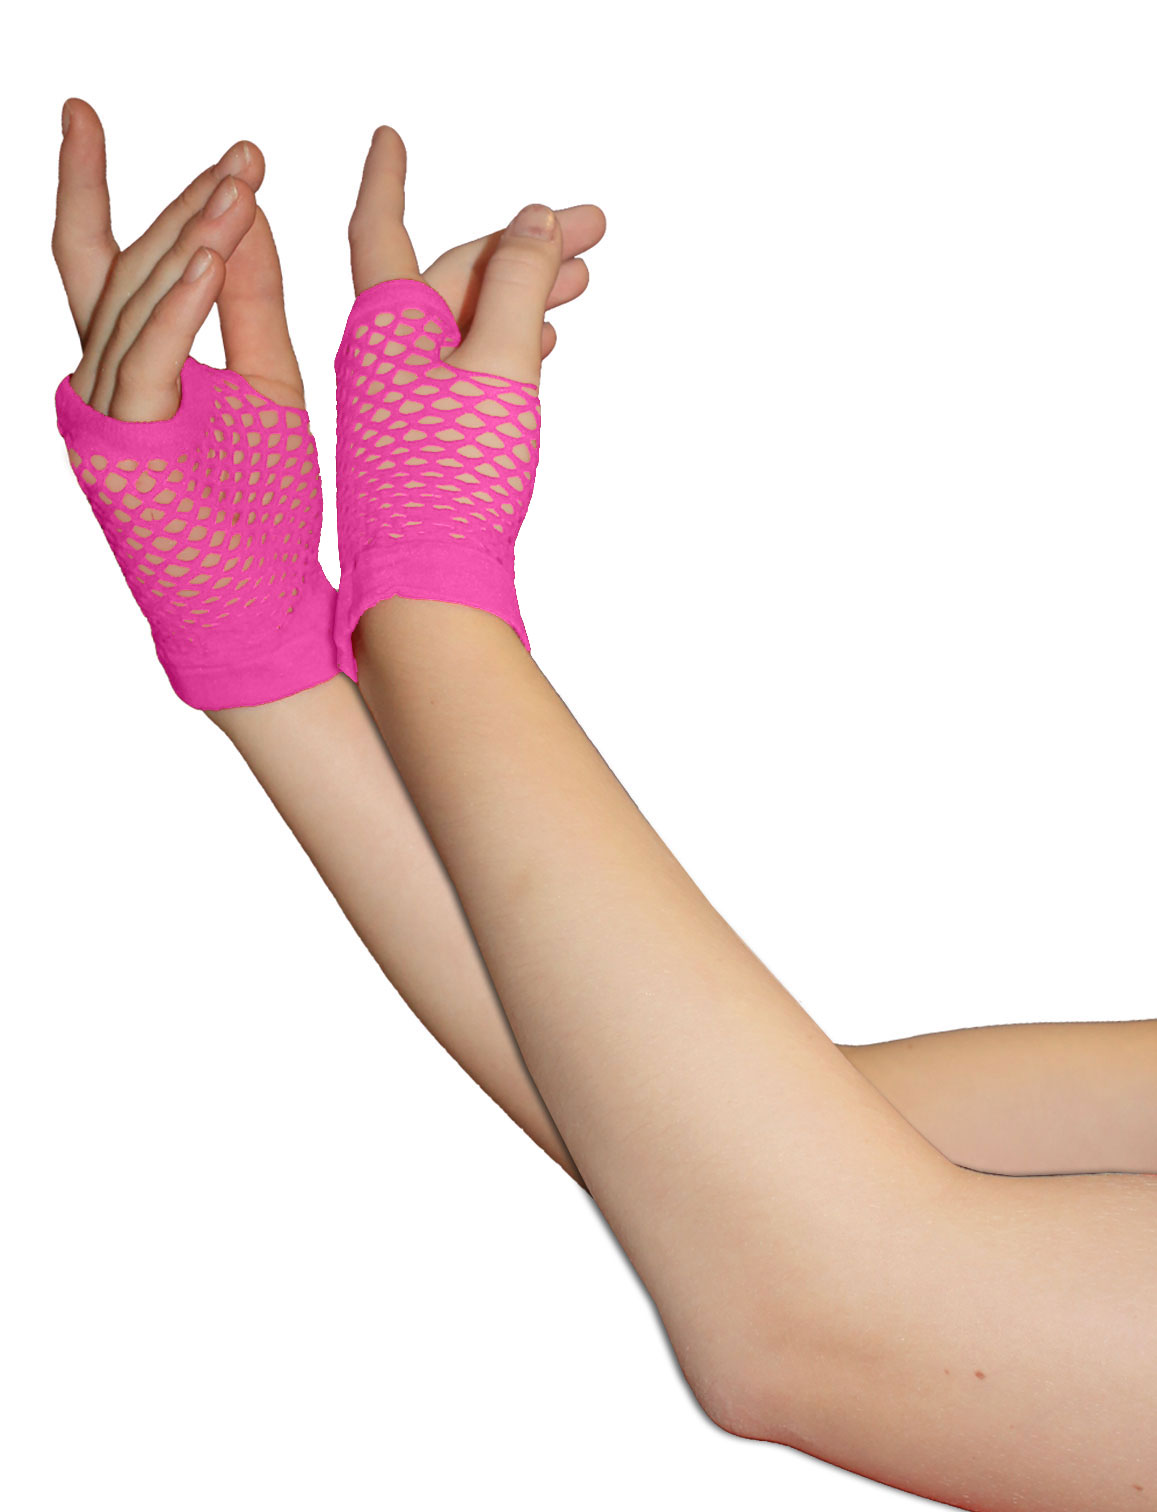 Wickedfun Pink Fingerless Short Fishnet Gloves (Pack of 12 pairs)